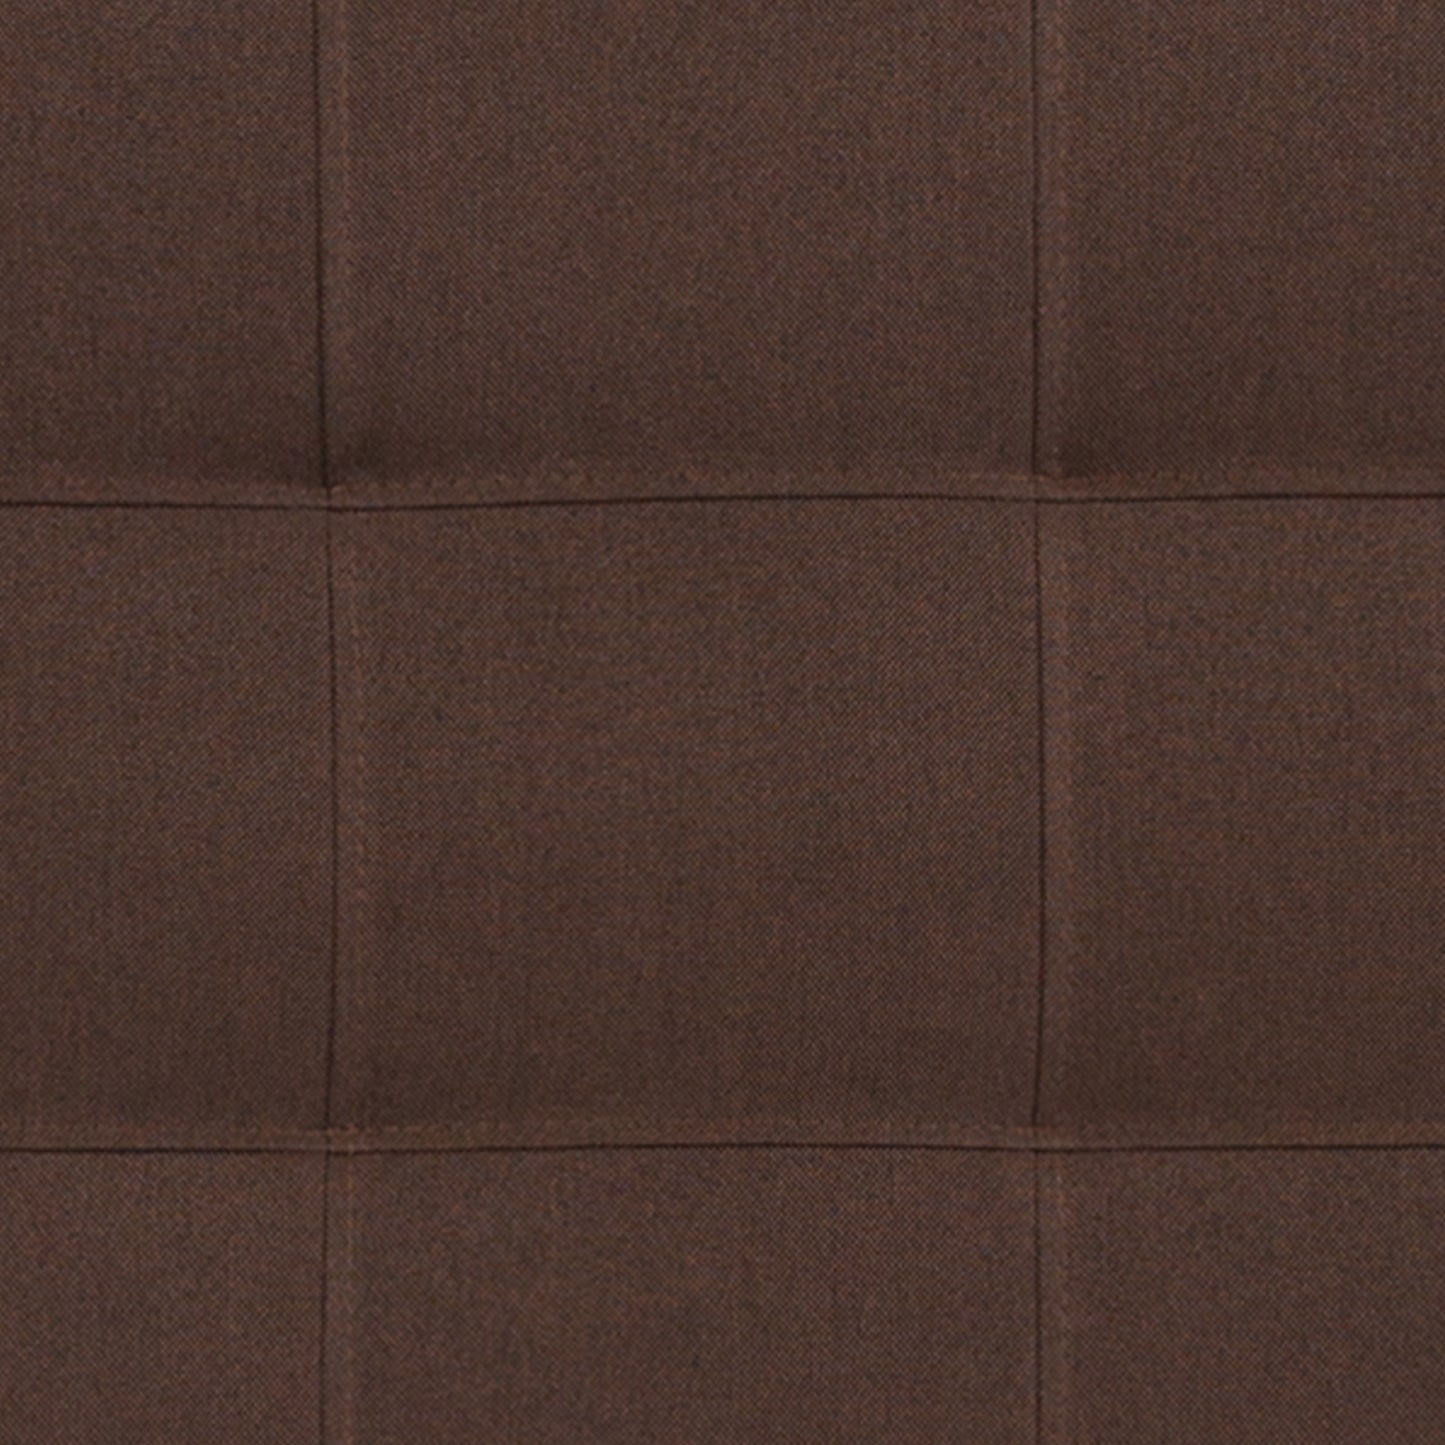 King Headboard-Brown Fabric HG-HB1704-K-DBR-GG